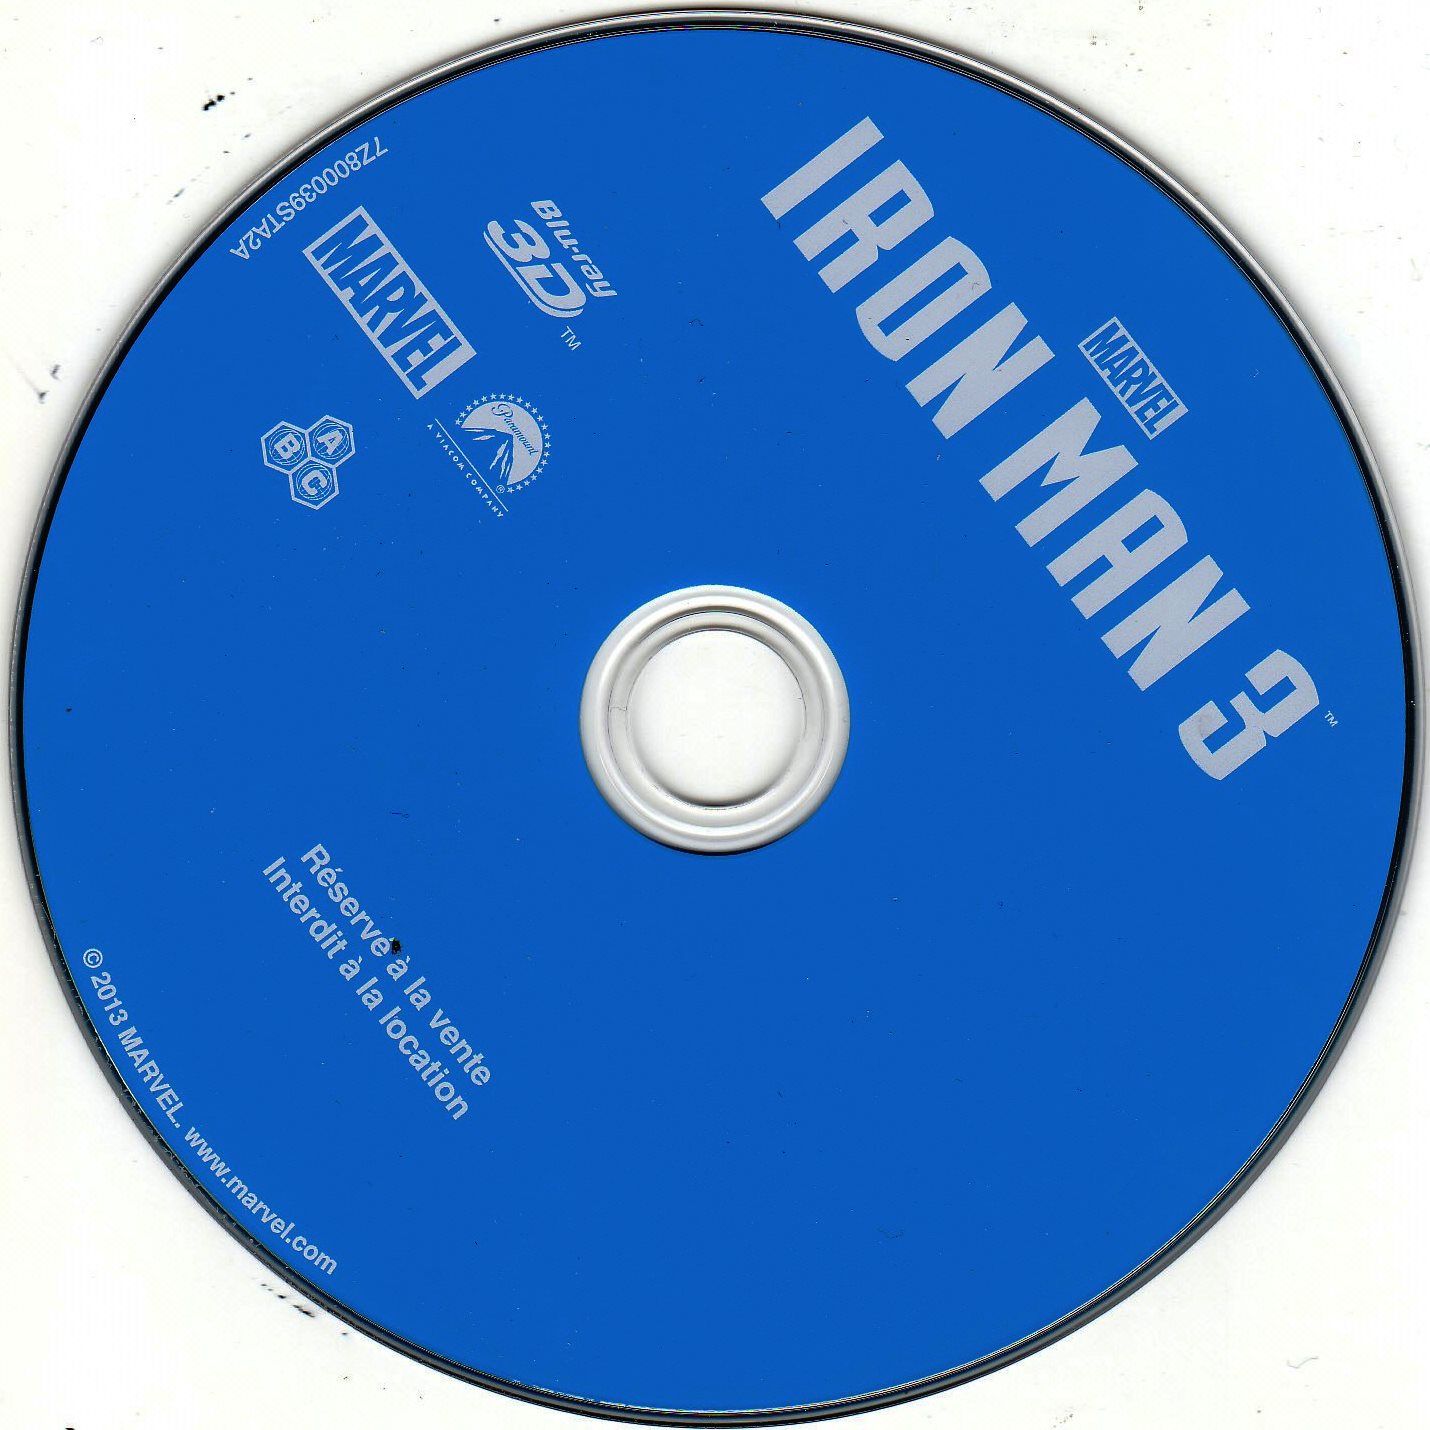 Iron man 3 3D (BLU-RAY)